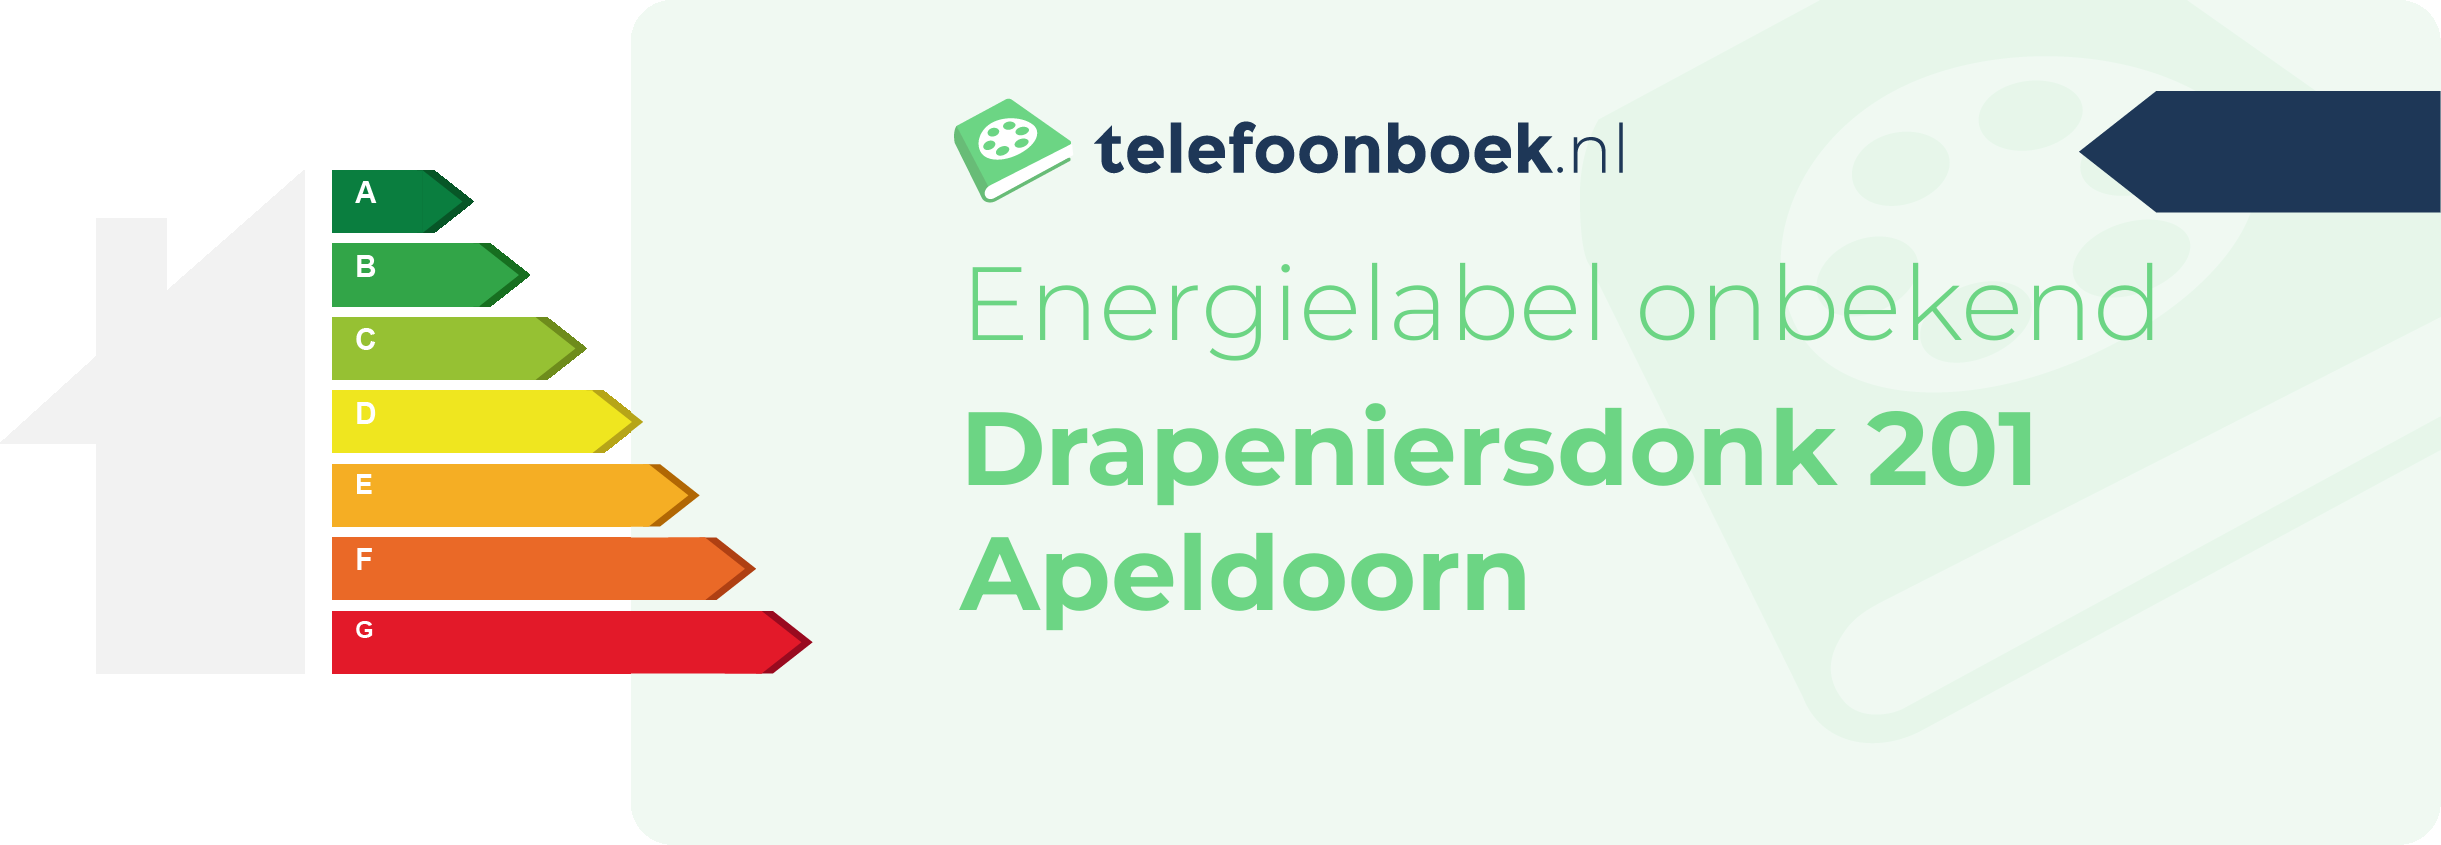 Energielabel Drapeniersdonk 201 Apeldoorn